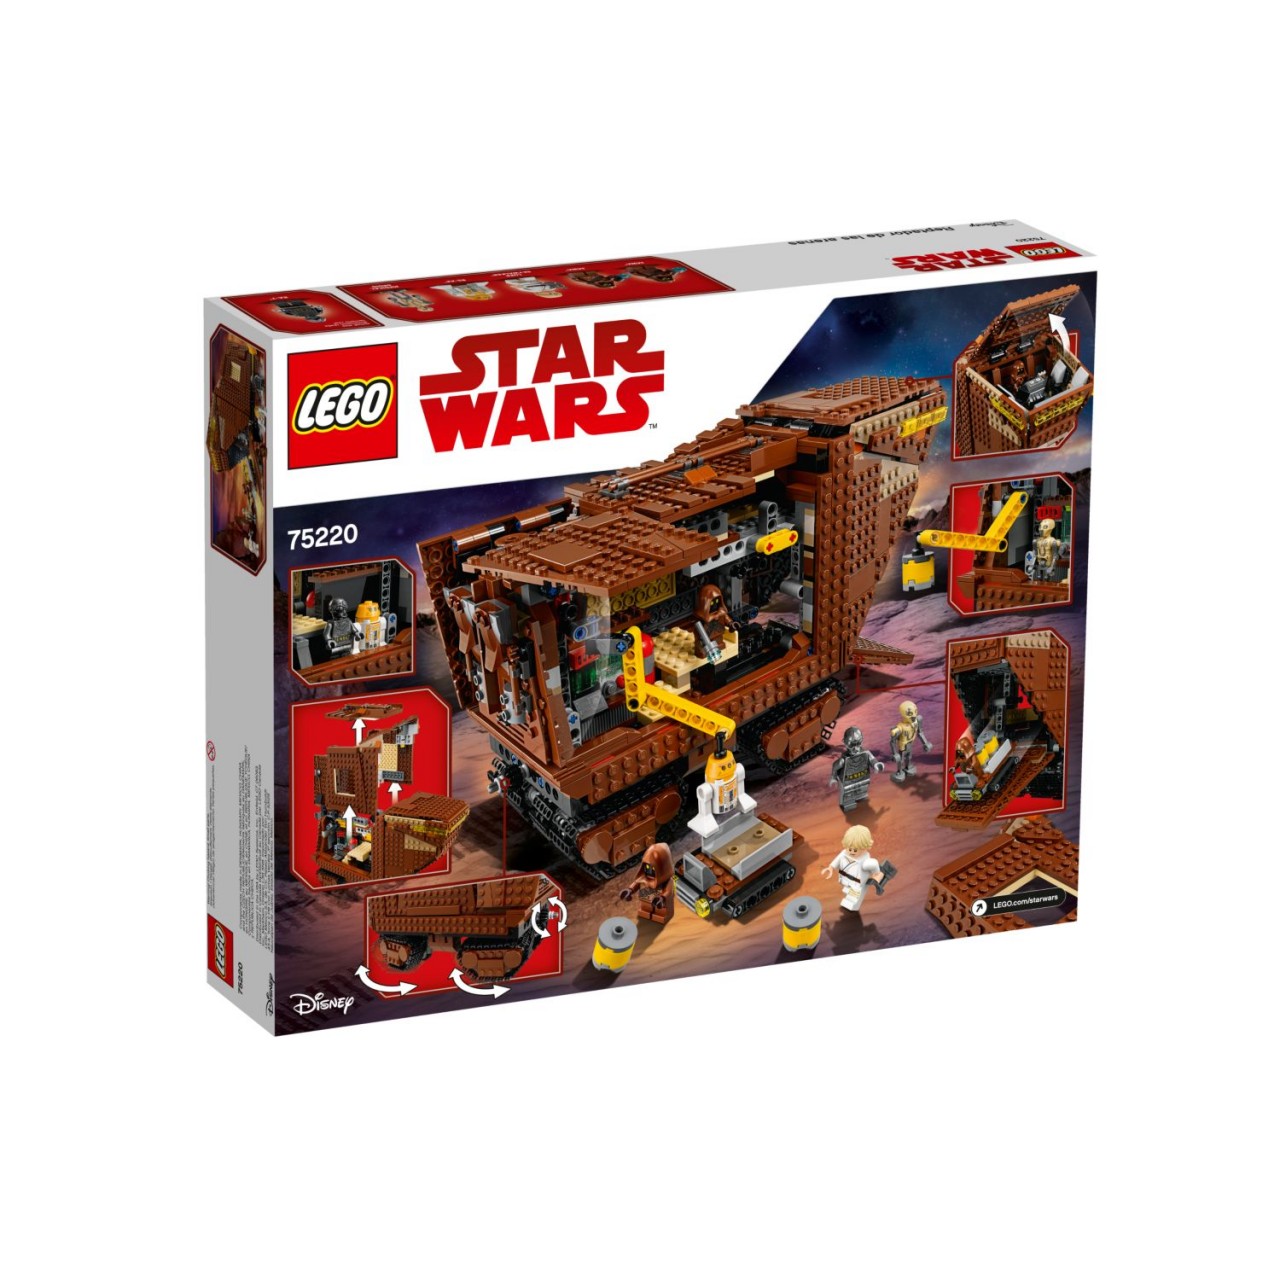 LEGO STAR WARS 75220 Sandcrawler